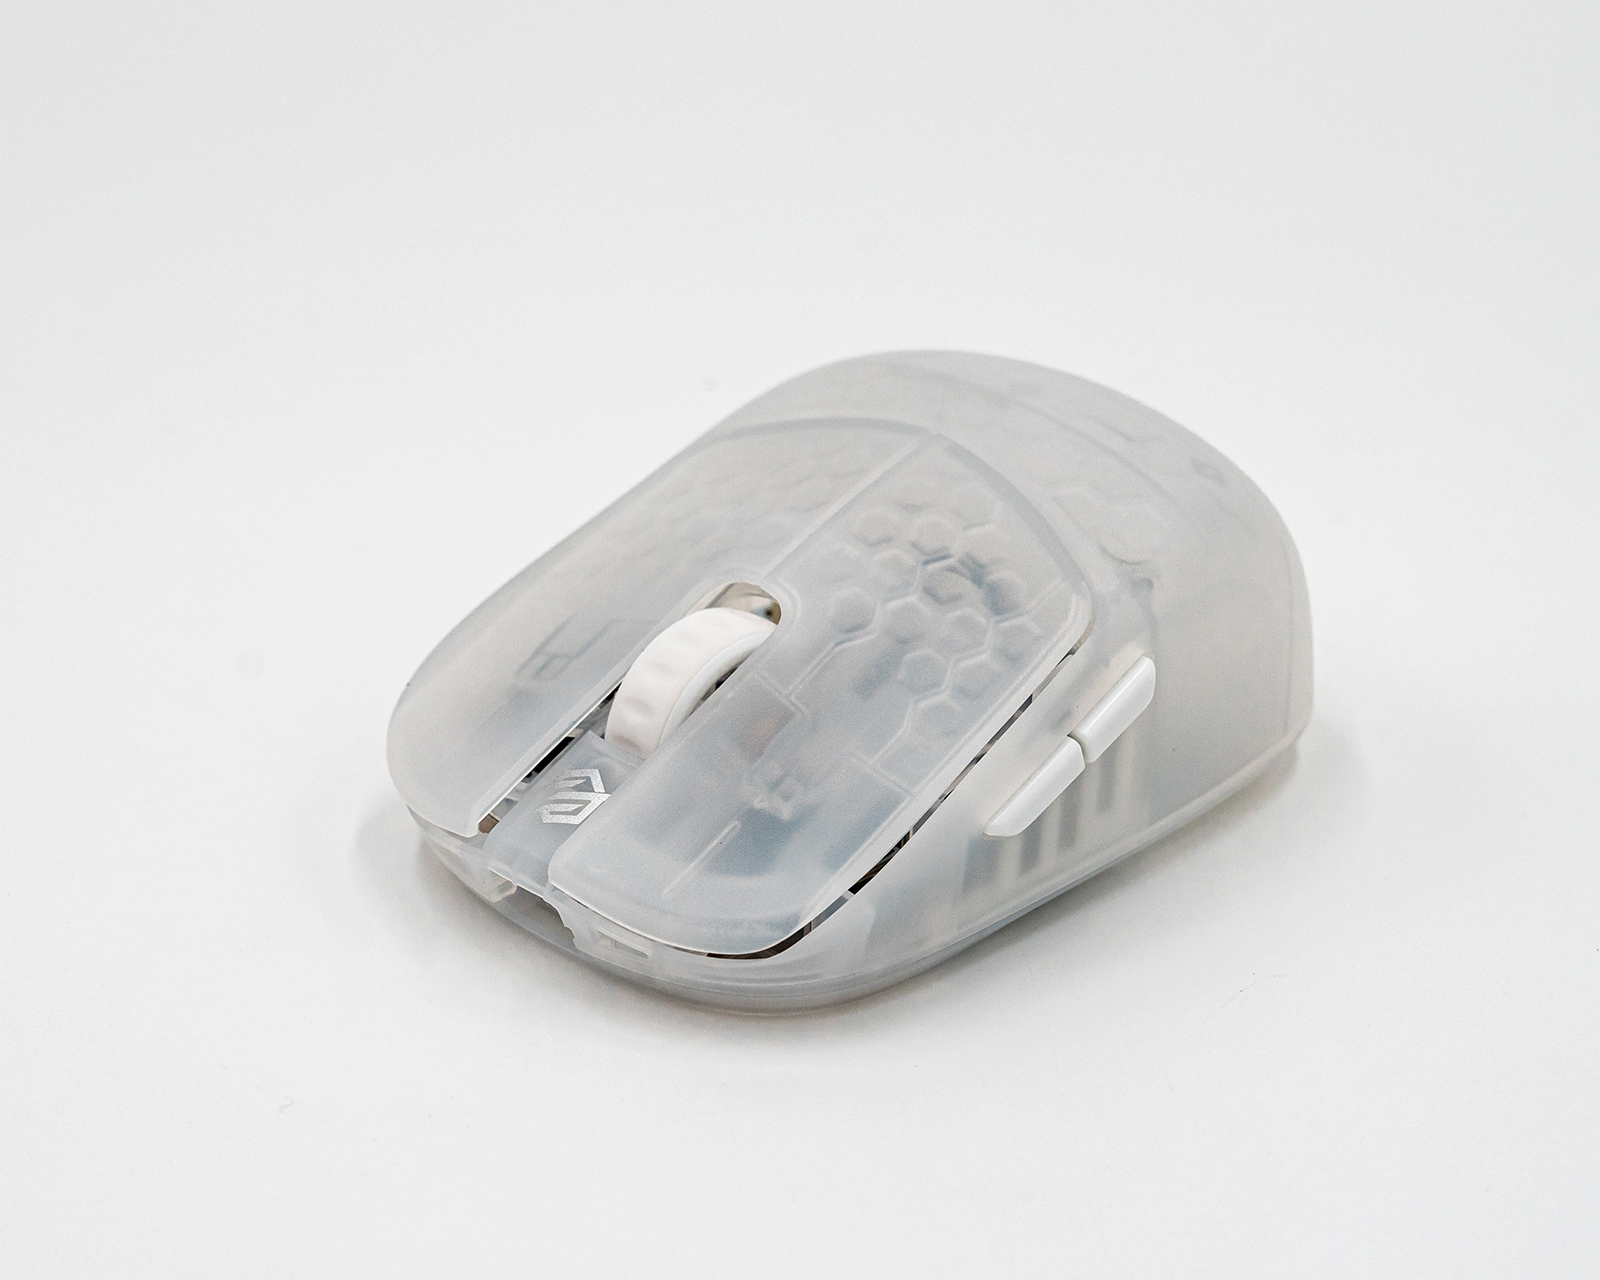 G-Wolves HSK Plus Fingertip Wireless Gaming Mouse - Transparent